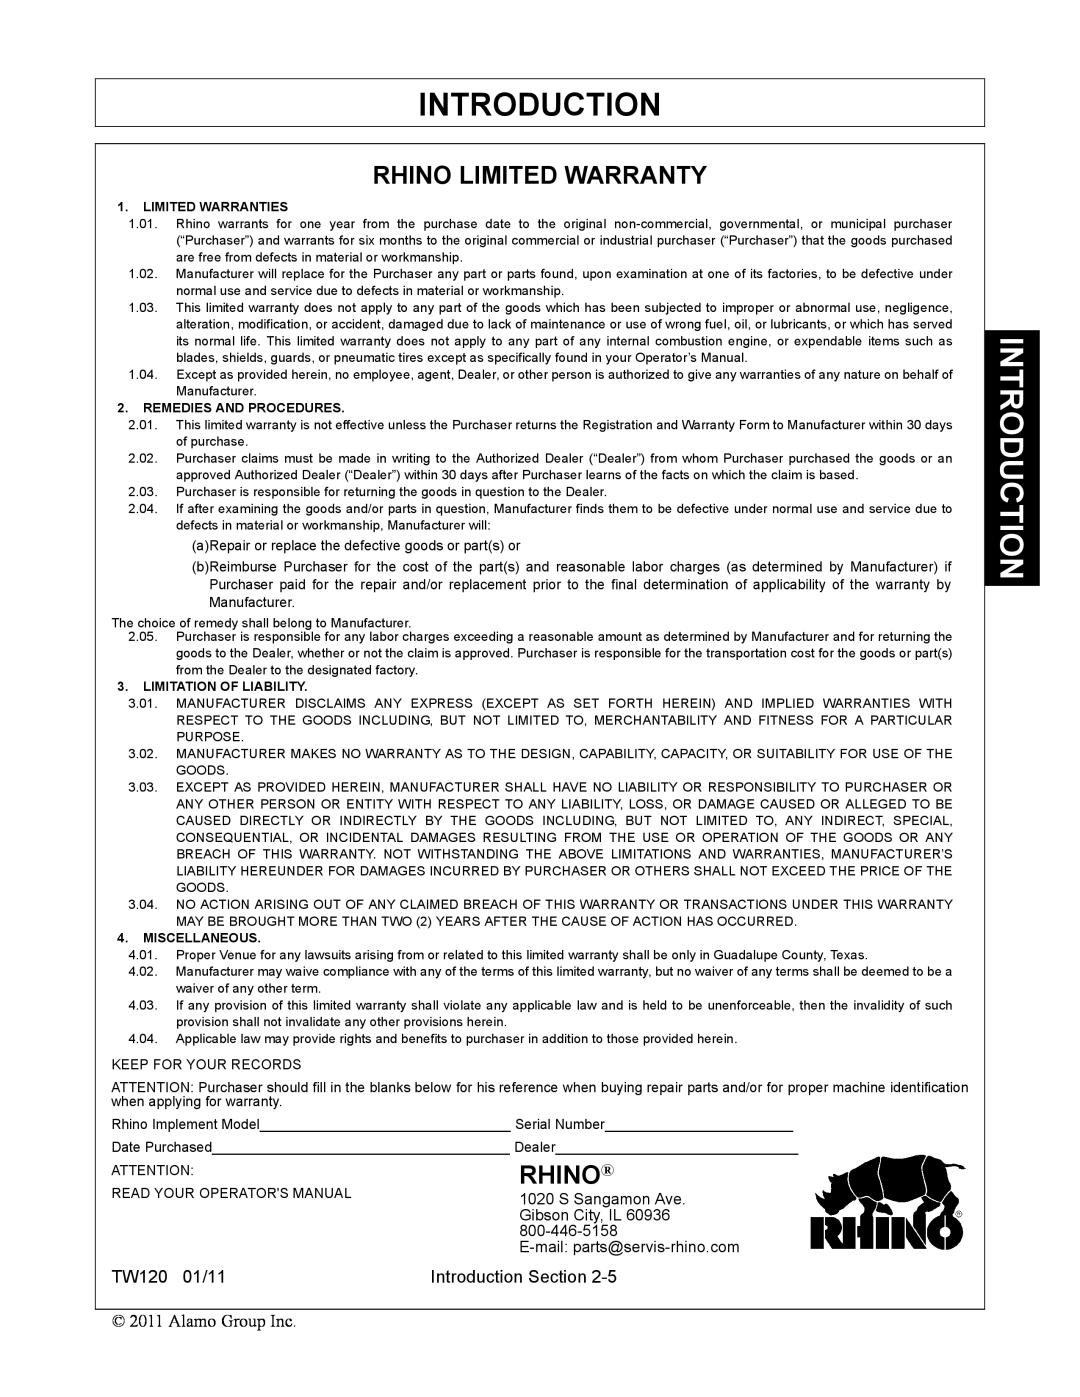 Blue Rhino FC-0025, FC-0024 manual Rhino Limited Warranty, Introduction, S Sangamon Ave, Gibson City, IL 